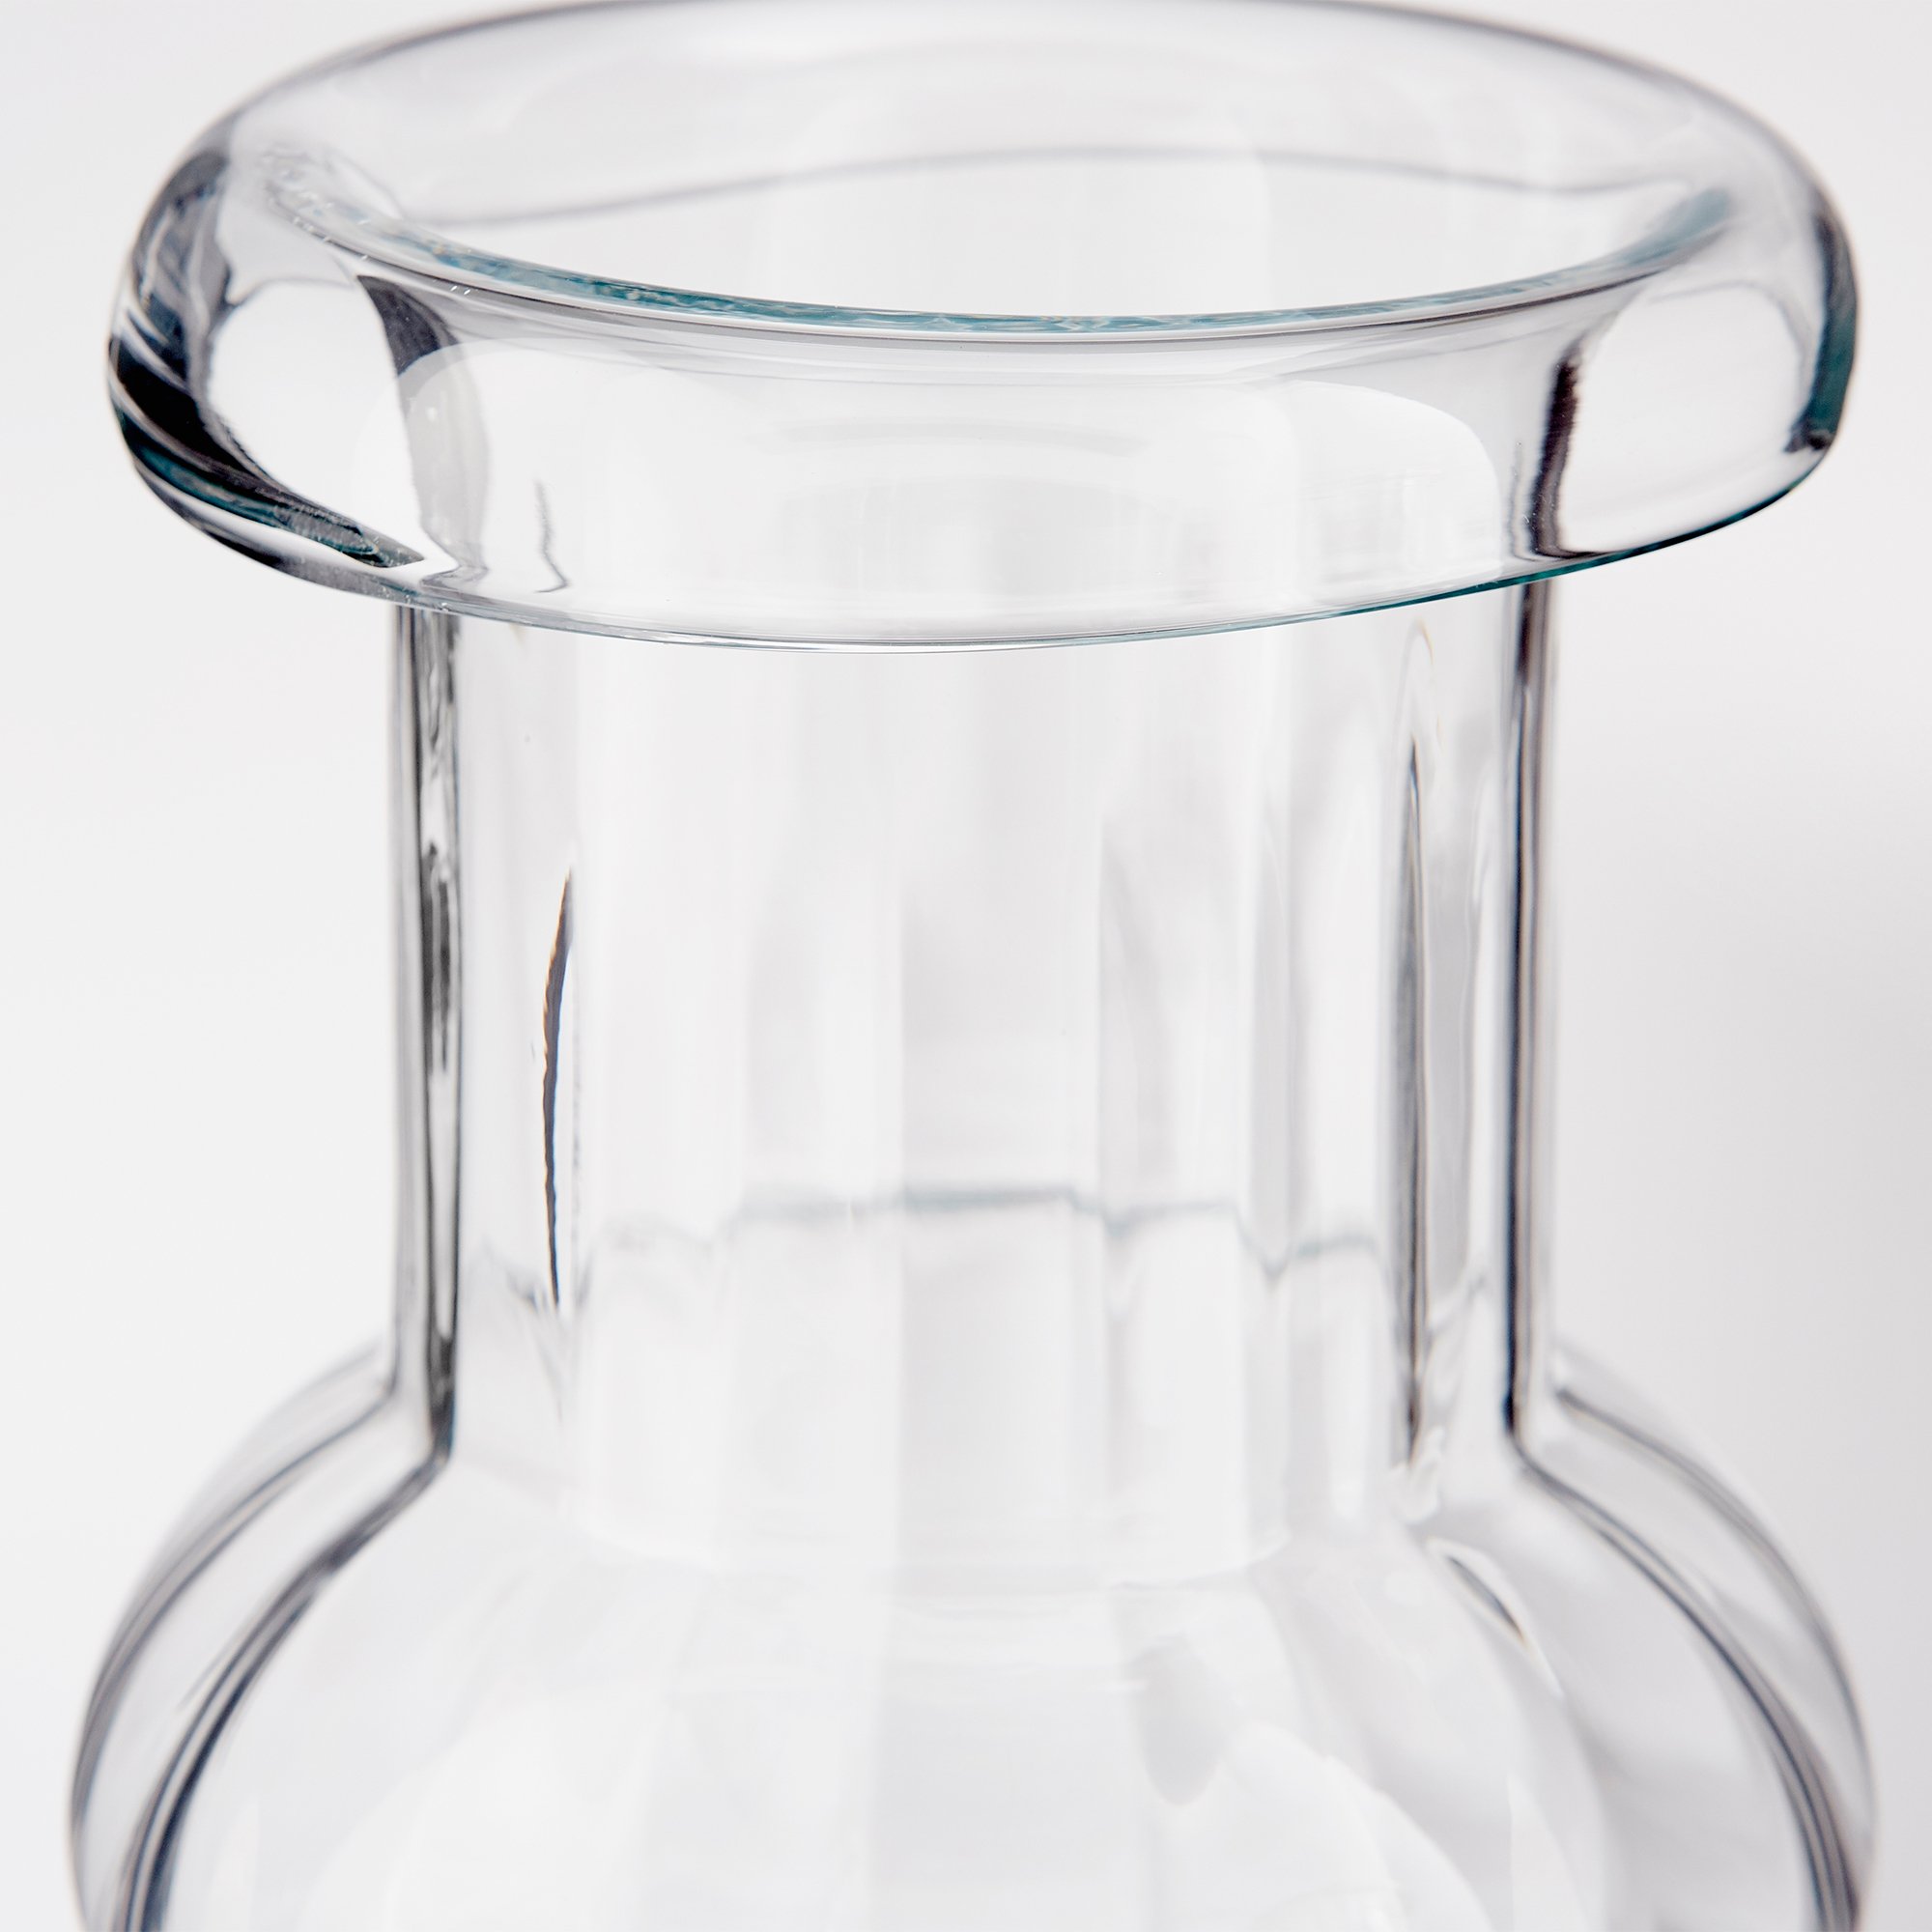 Small Hurley Vase - Image 1